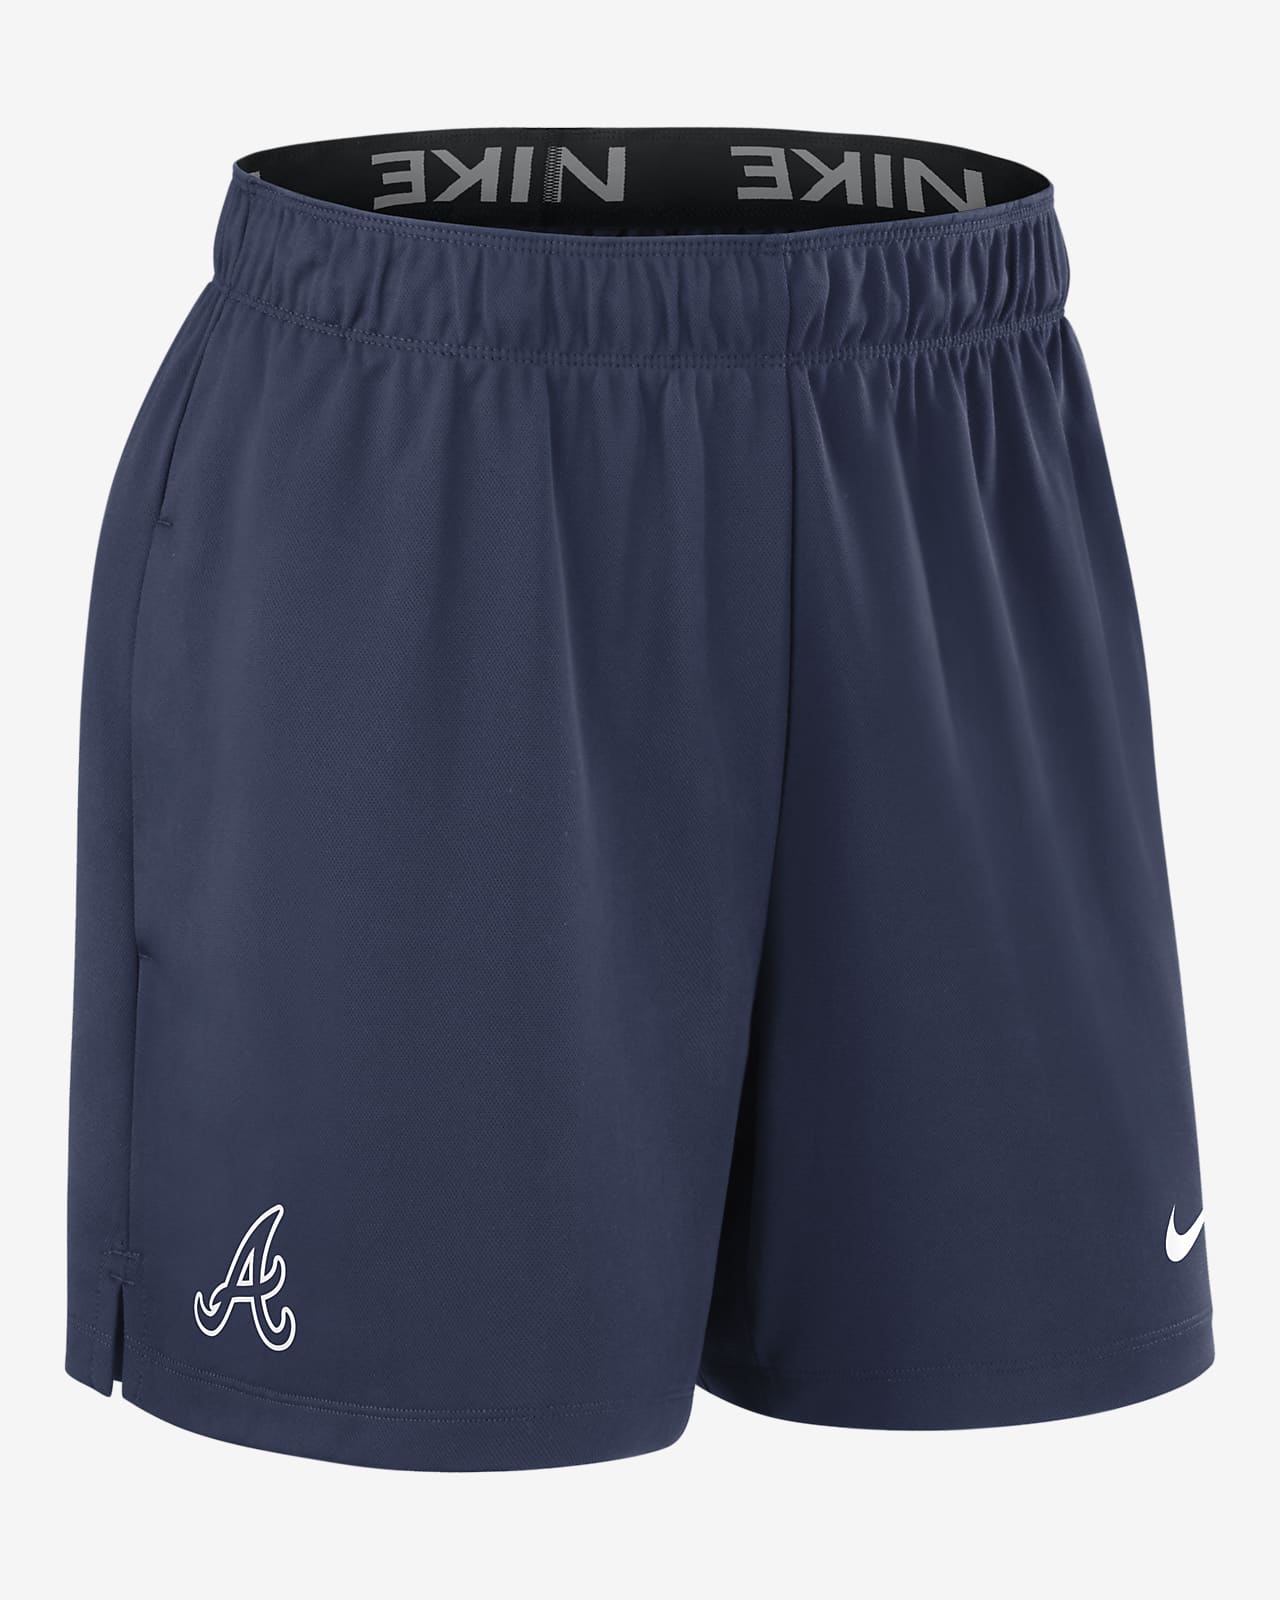 Atlanta Braves Authentic Nike Dri Fit Short - Mens